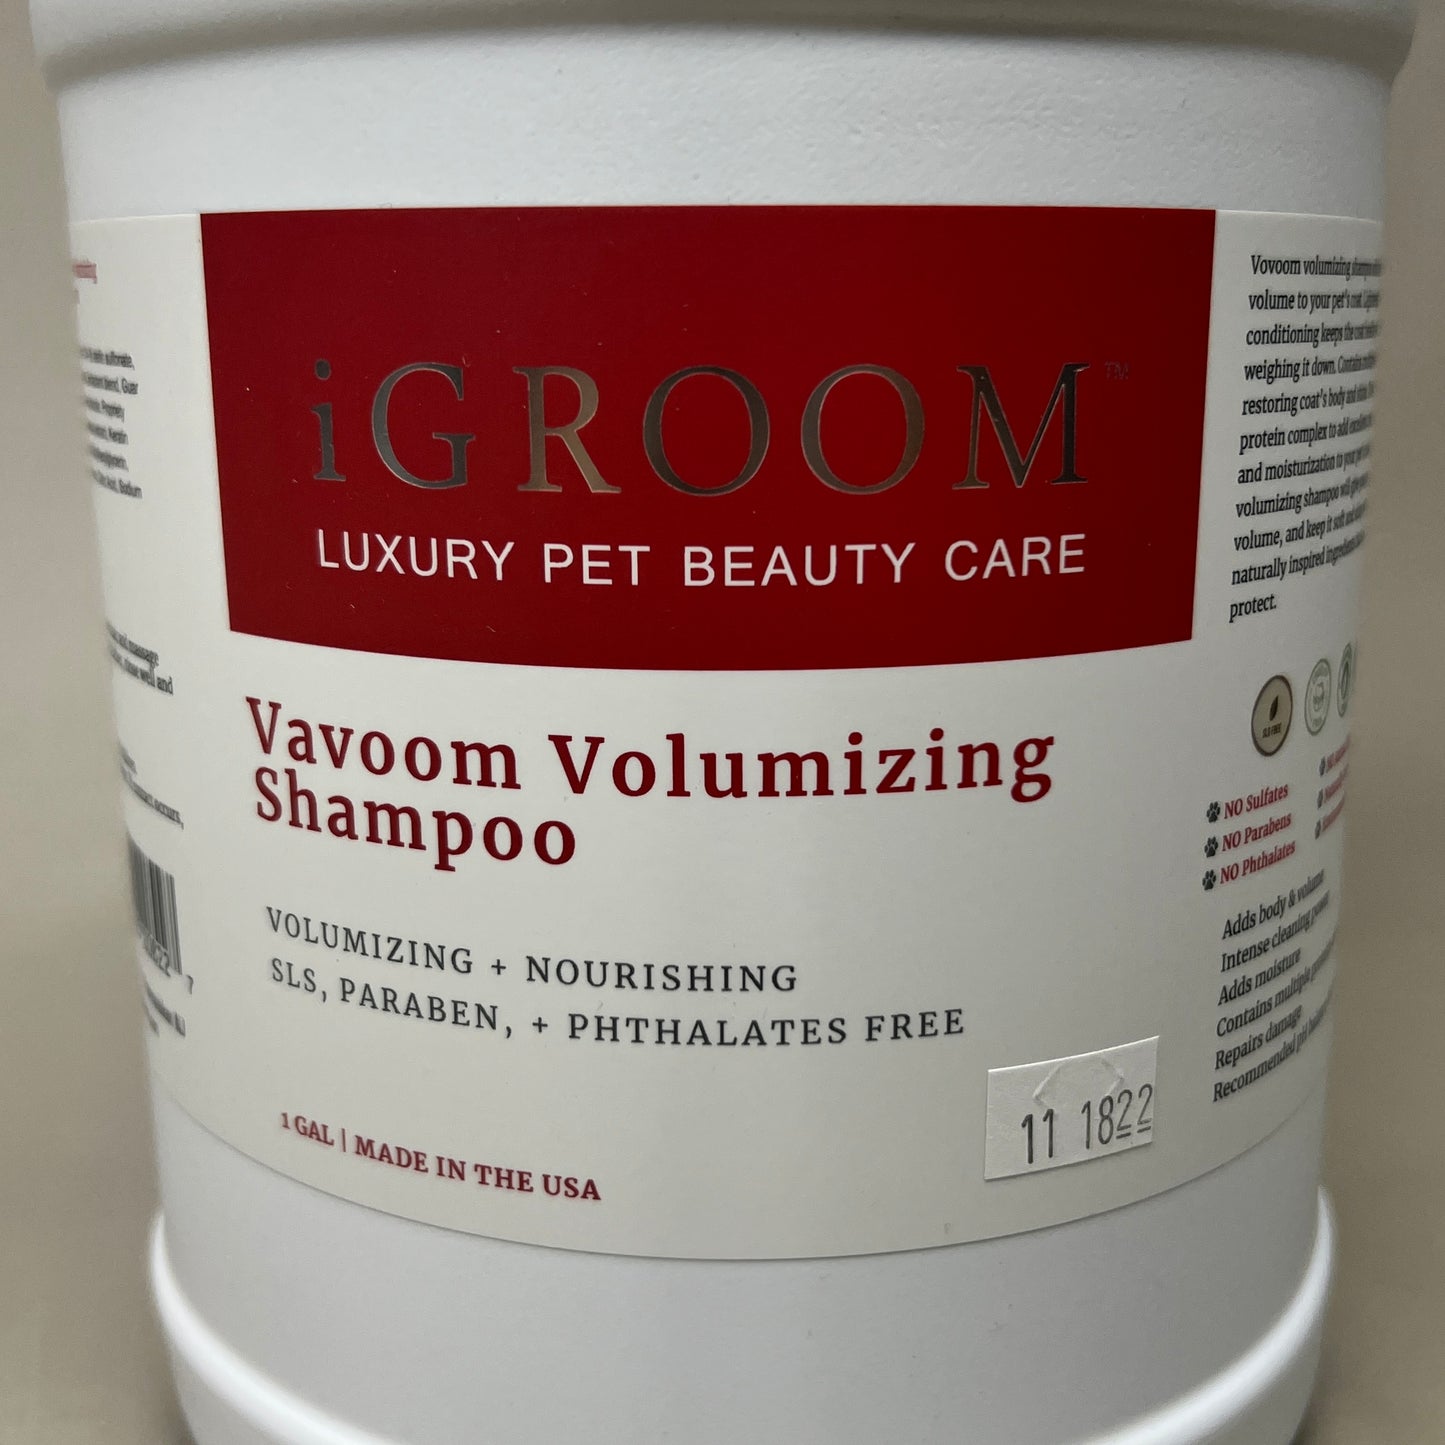 IGROOM Vavoom Volumizing Pet Shampoo, Luxury Pet Beauty Care 128 fl oz (New)